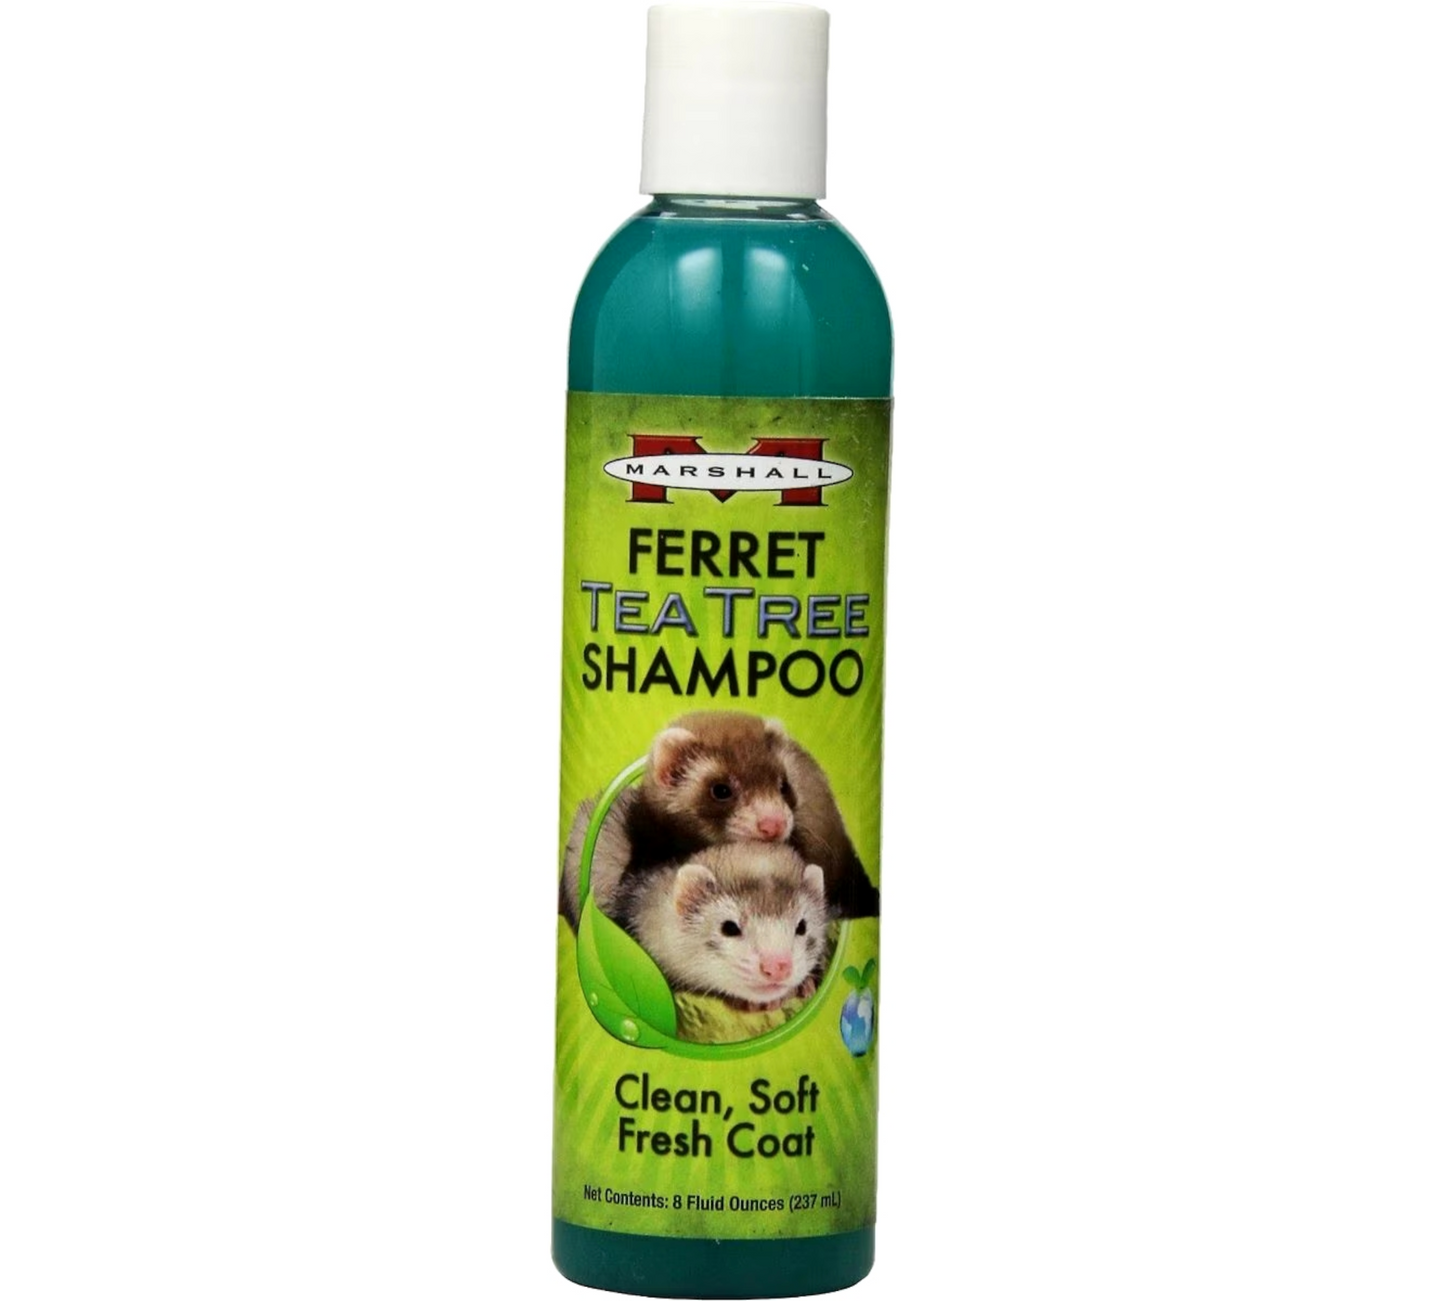 Marshall Tea Tree Shampoo for Ferrets,